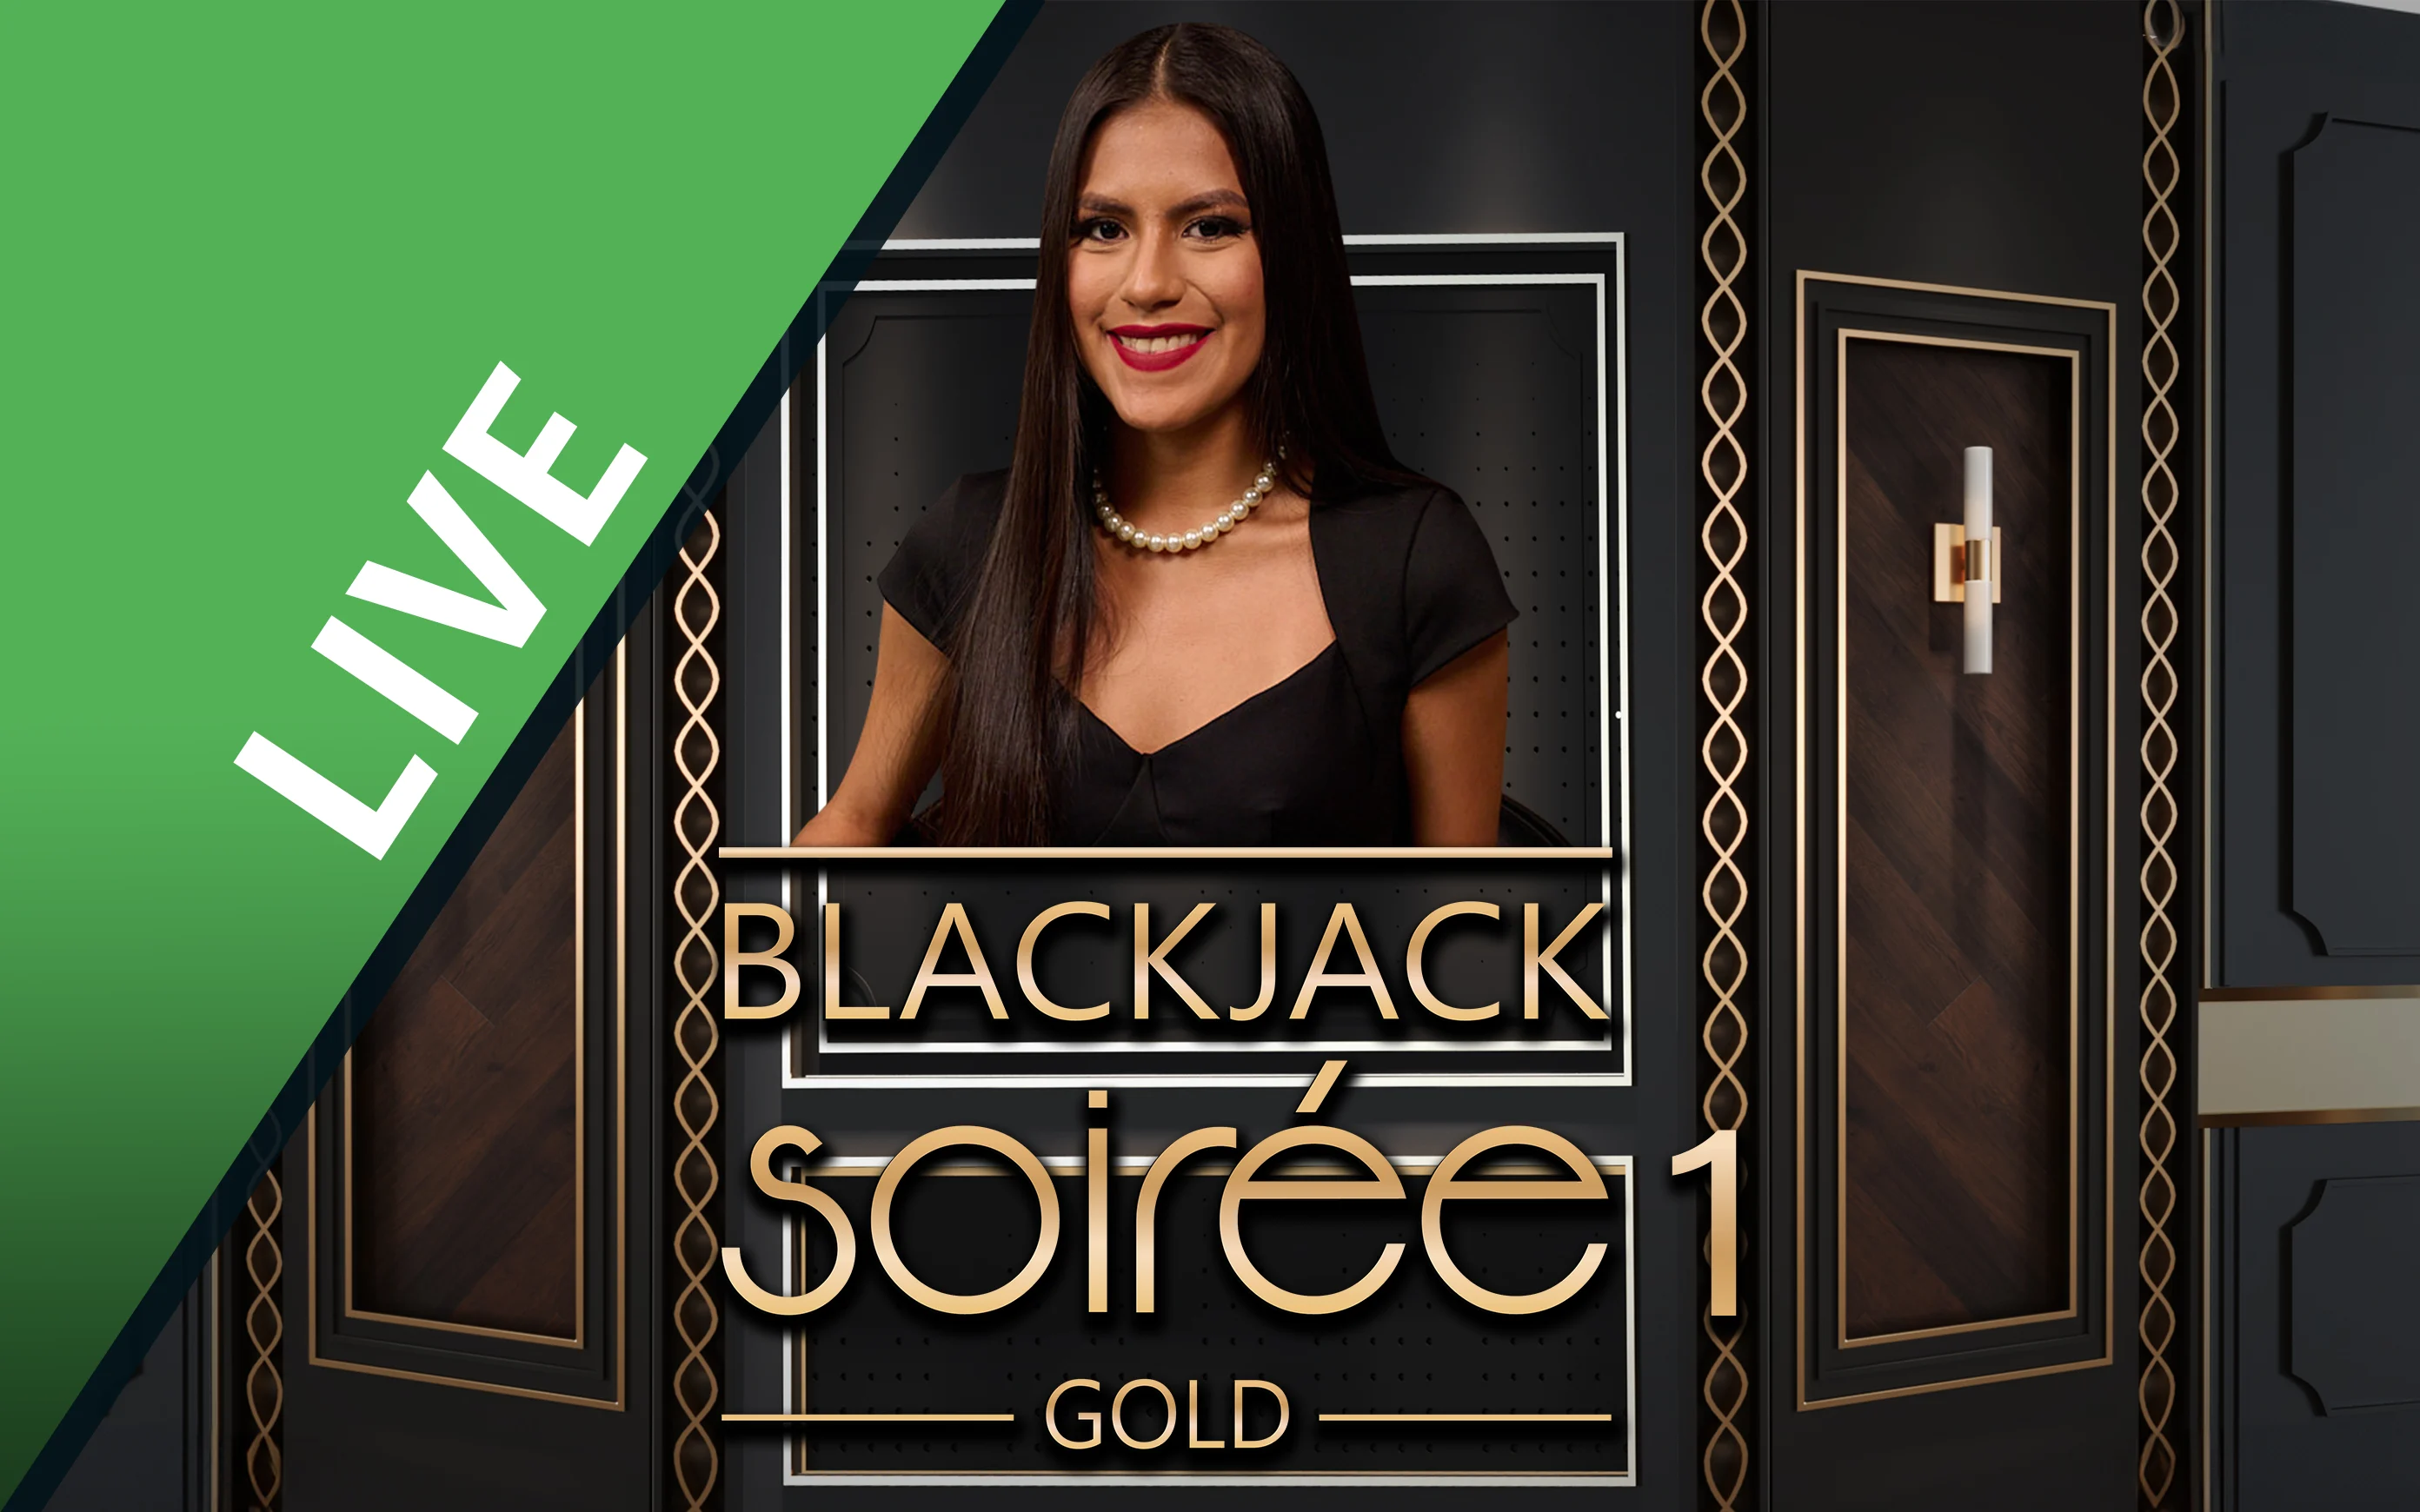 Gioca a Blackjack Soirée Gold 1 sul casino online Starcasino.be